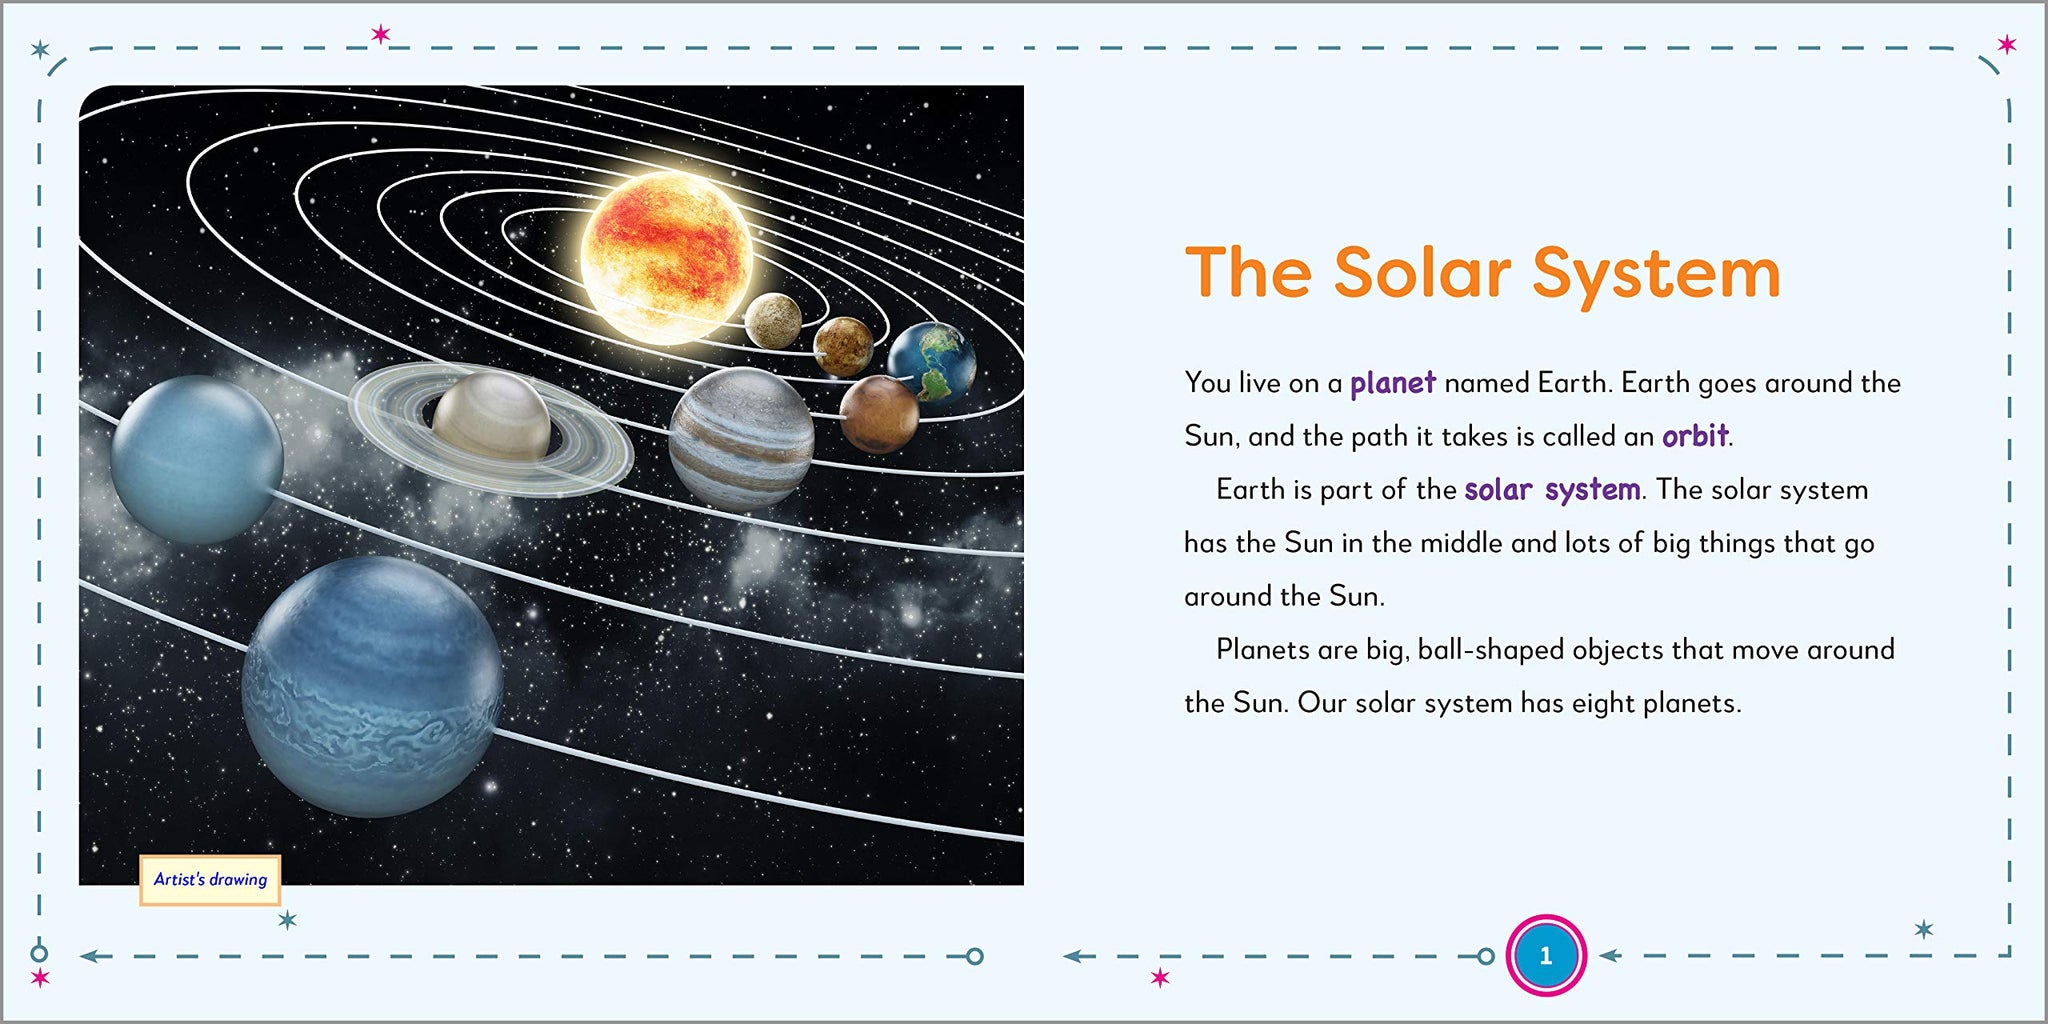 Explain the solar system in detail.